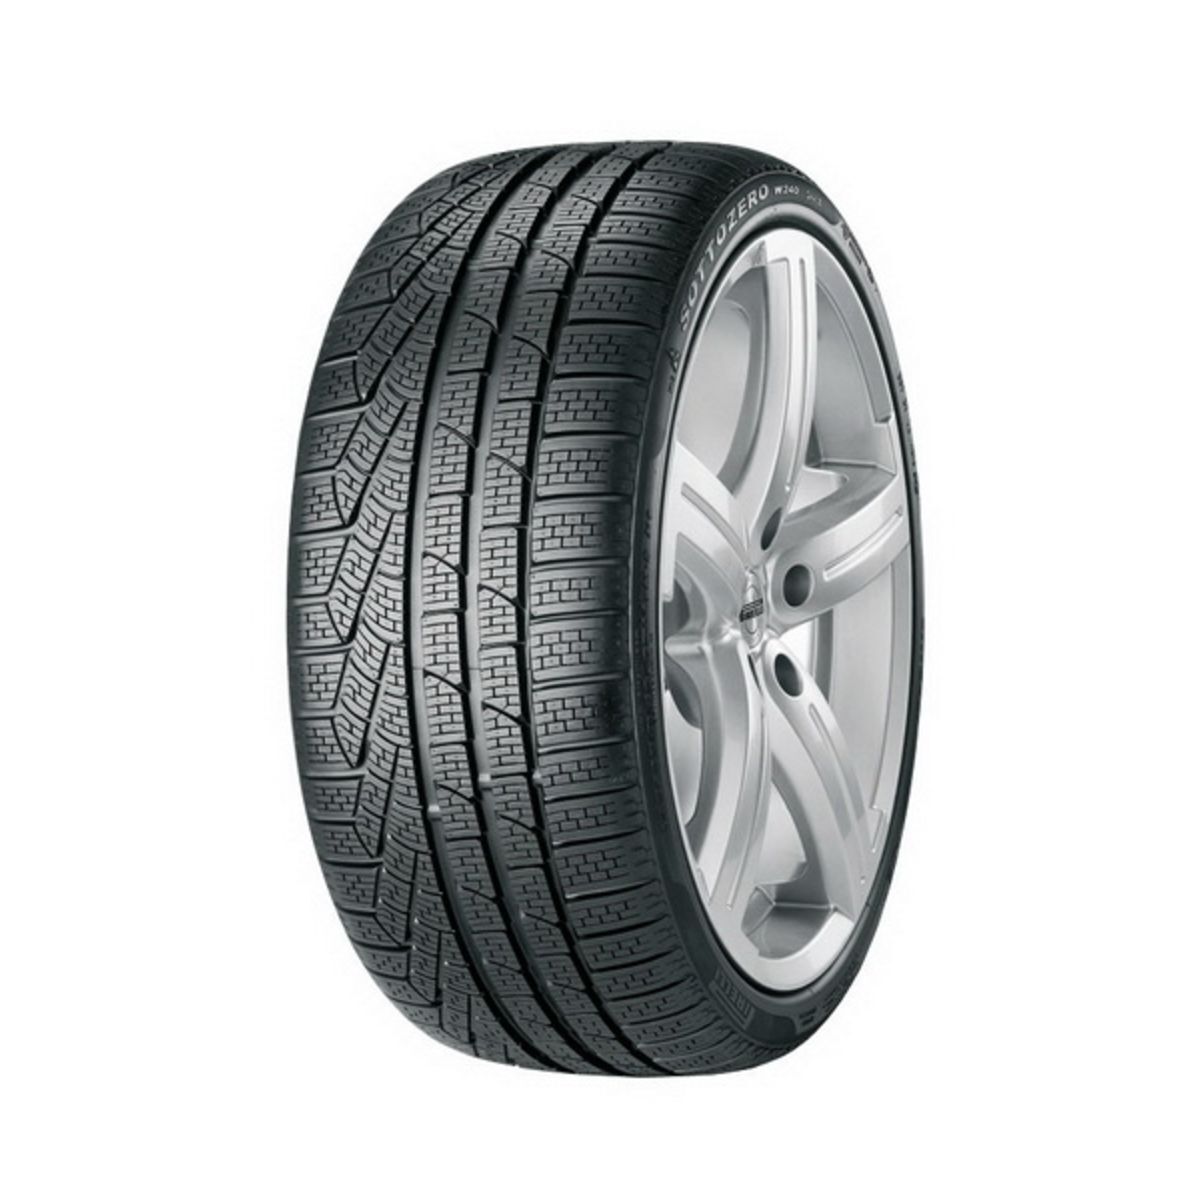 Neumáticos de invierno PIRELLI SottoZero serie II 255/35R20 XL 97W